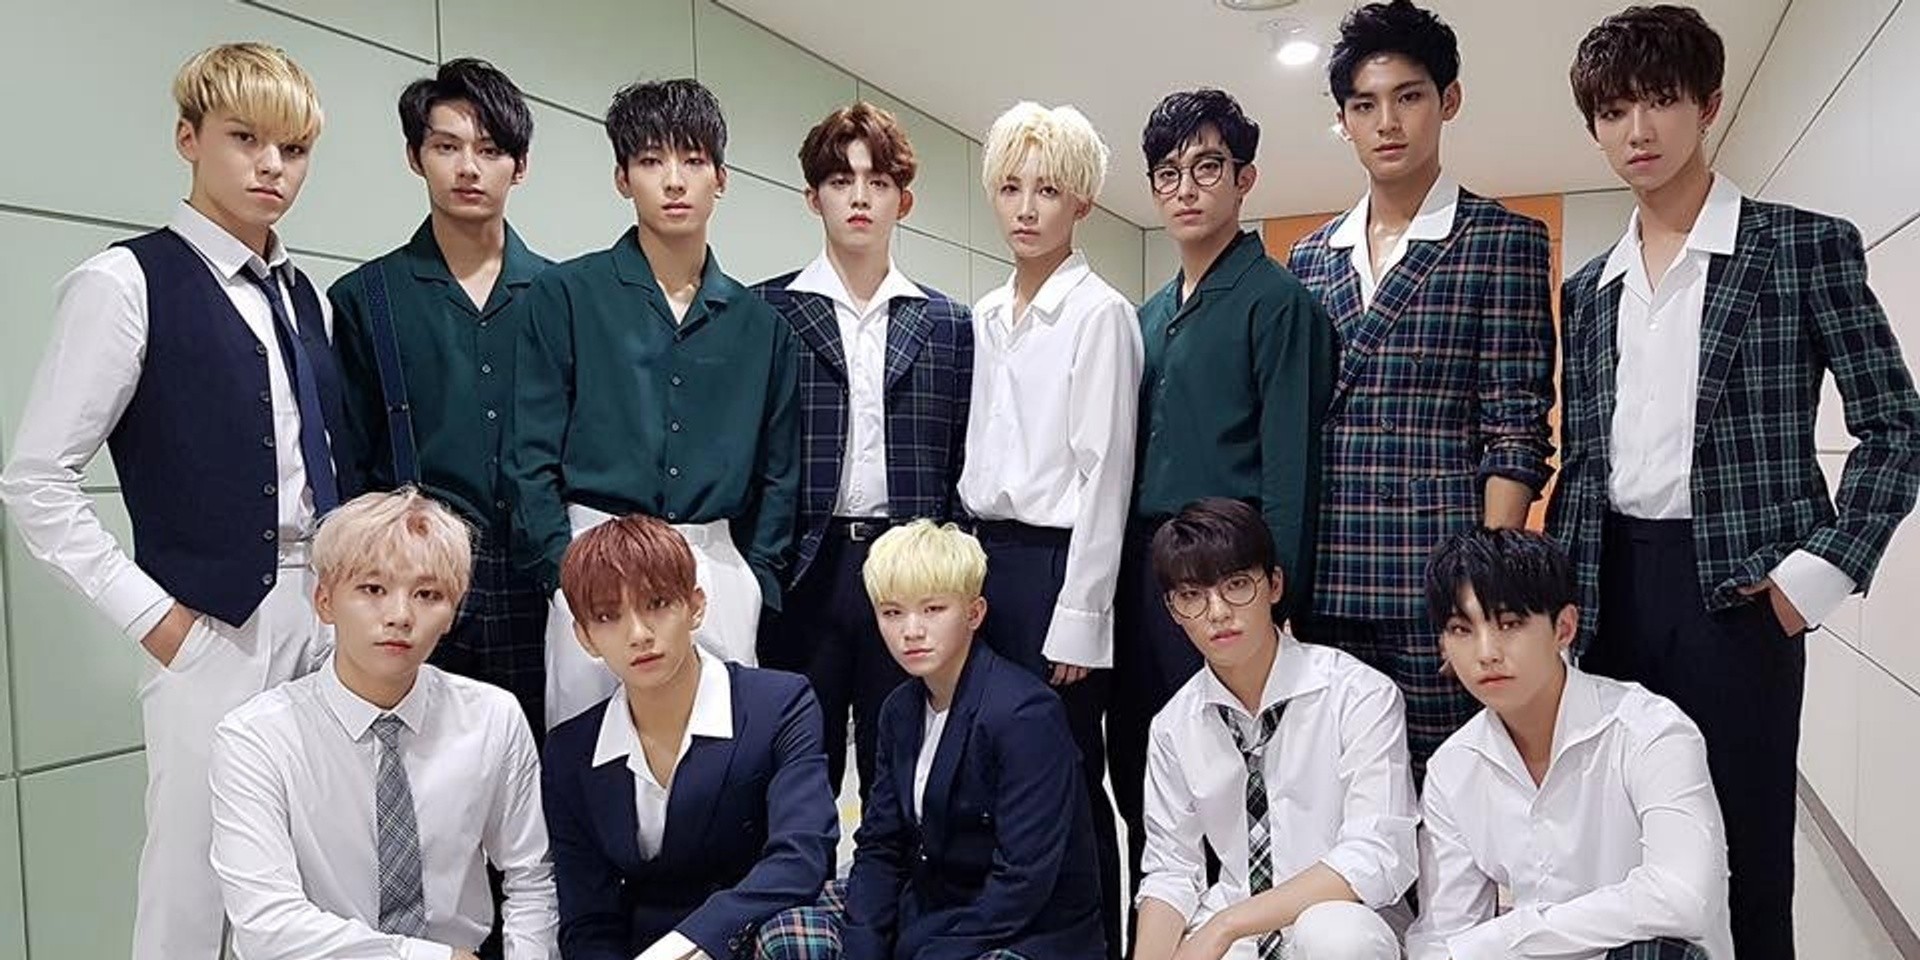 Korean boyband Seventeen holds first world tour, including Singapore